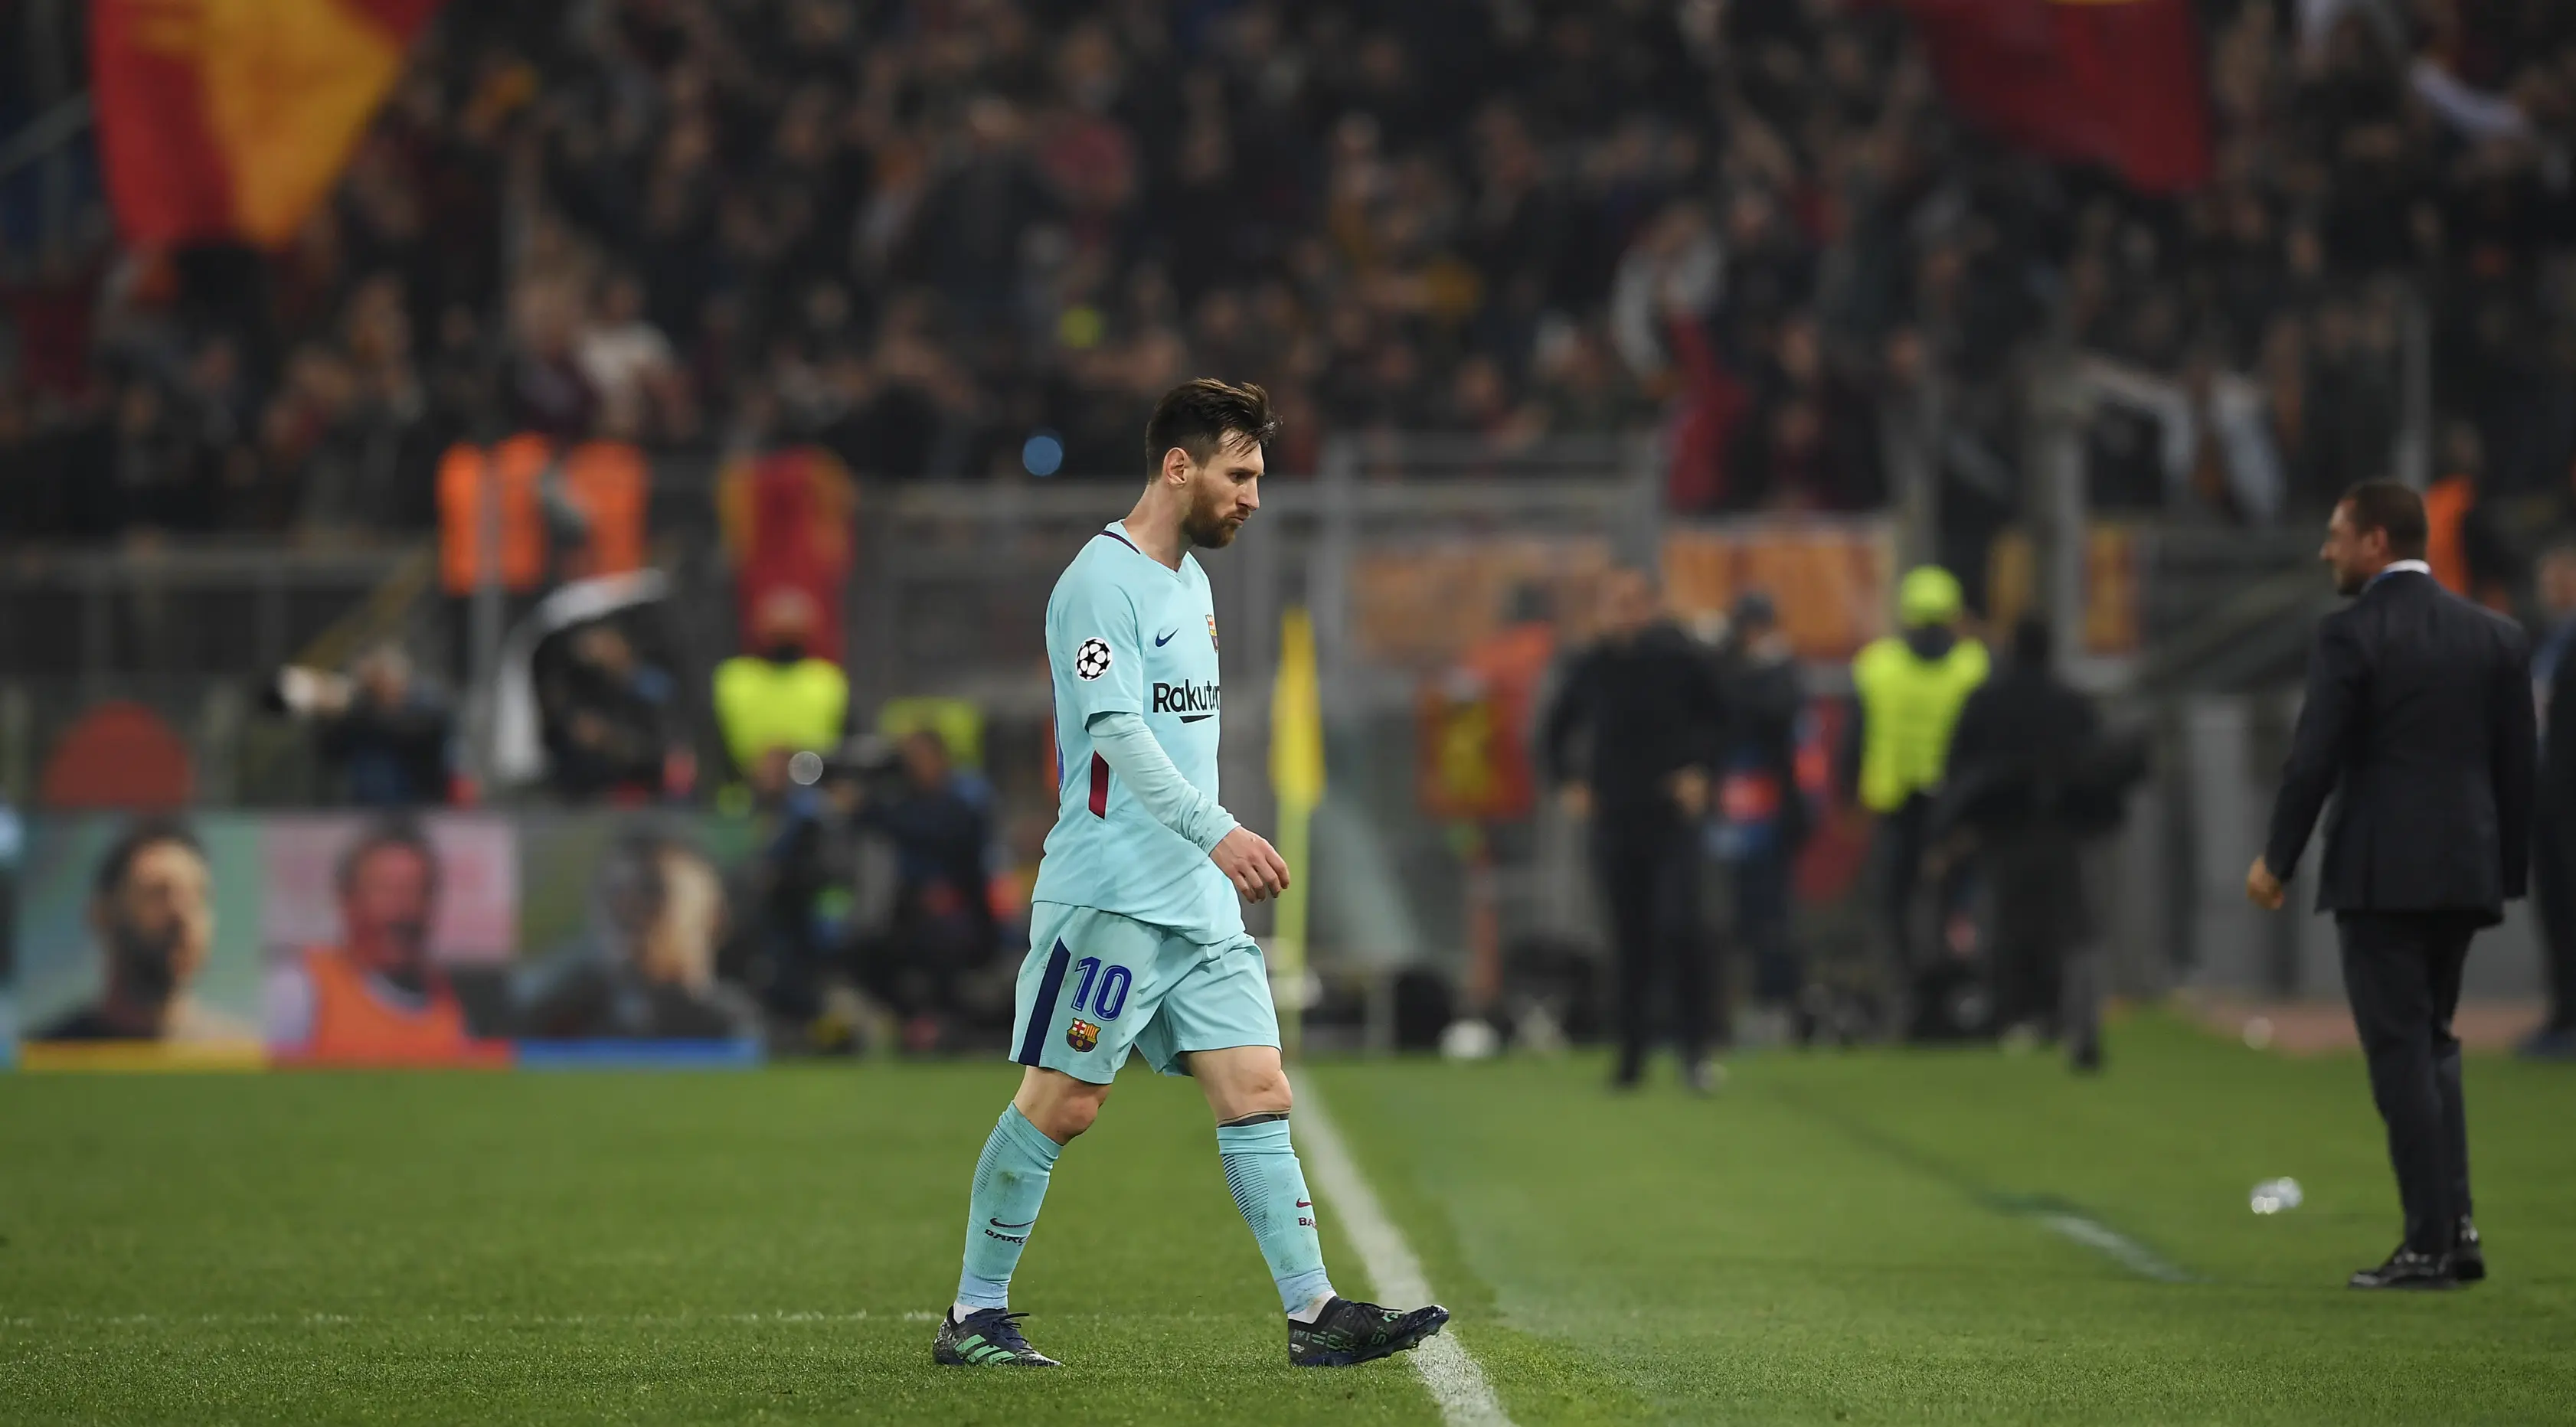 Pemain Barcelona, Lionel Messi tertunduk meninggalkan lapangan usai kalah dari AS Roma pada laga leg kedua perempat final Liga Champions di Stadion Olimpico, Selasa (10/4). Bercelona tersingkir setelah menyerah 0-3 dari AS Roma. (Andreas SOLARO/AFP)